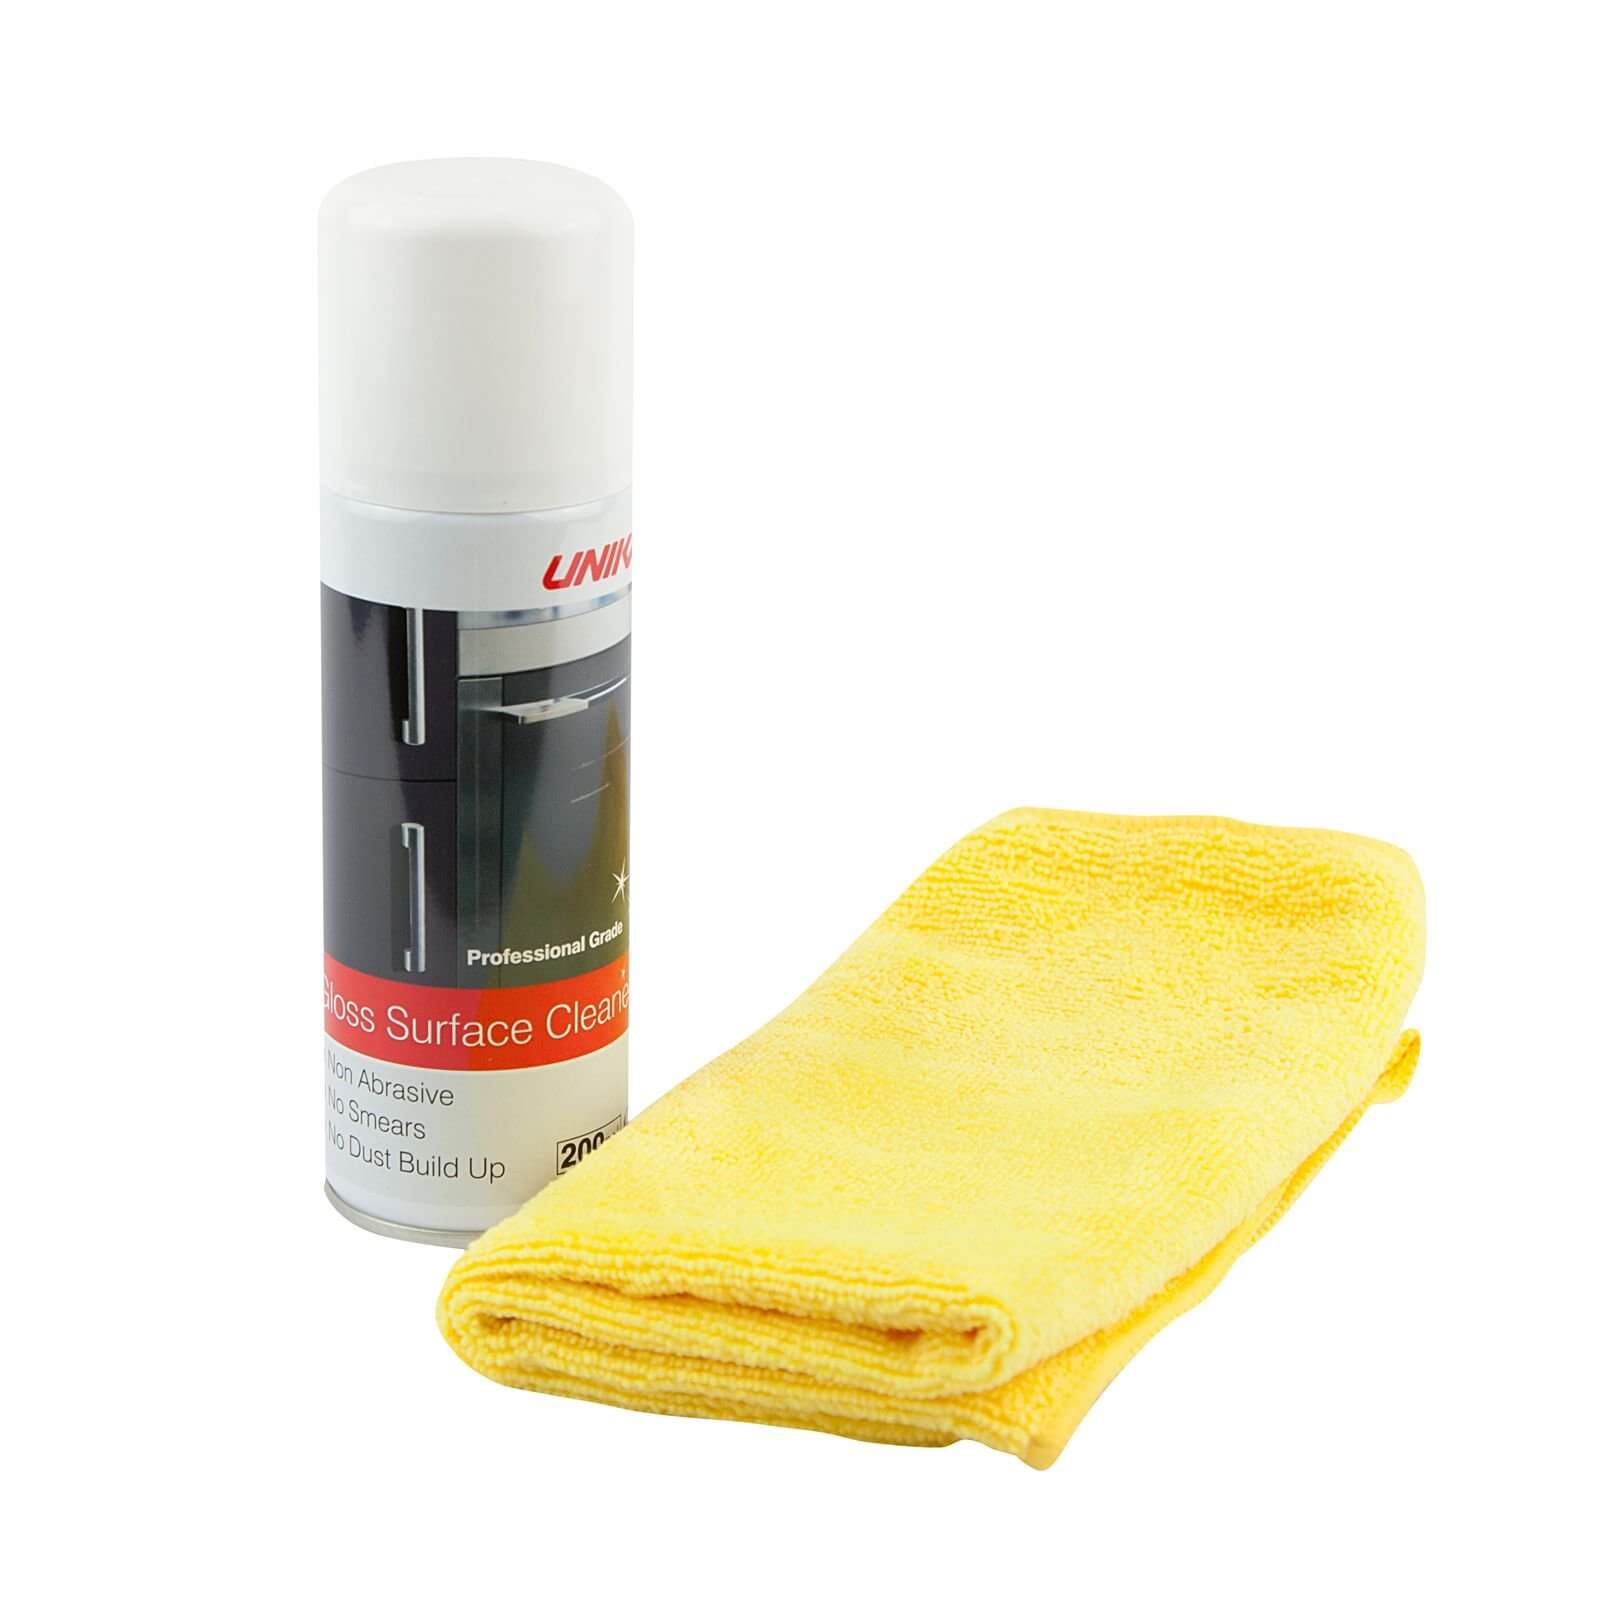 Unika Gloss Cleaner & Microfibre Cloth - 200ml